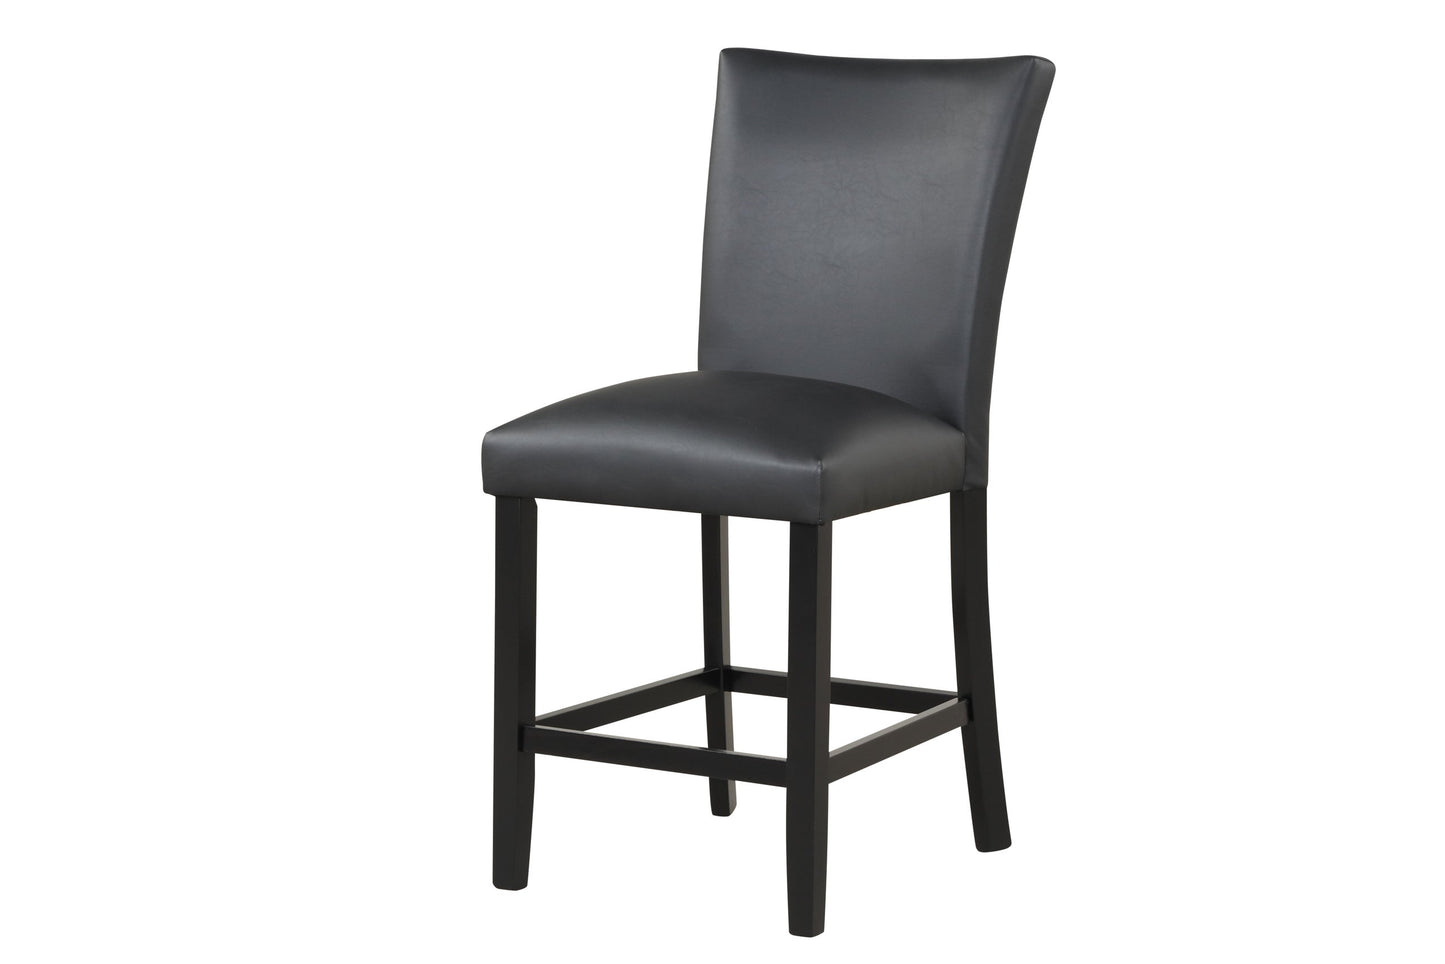 Dior PU - Black Pub Table + 4 Chair Dining Set